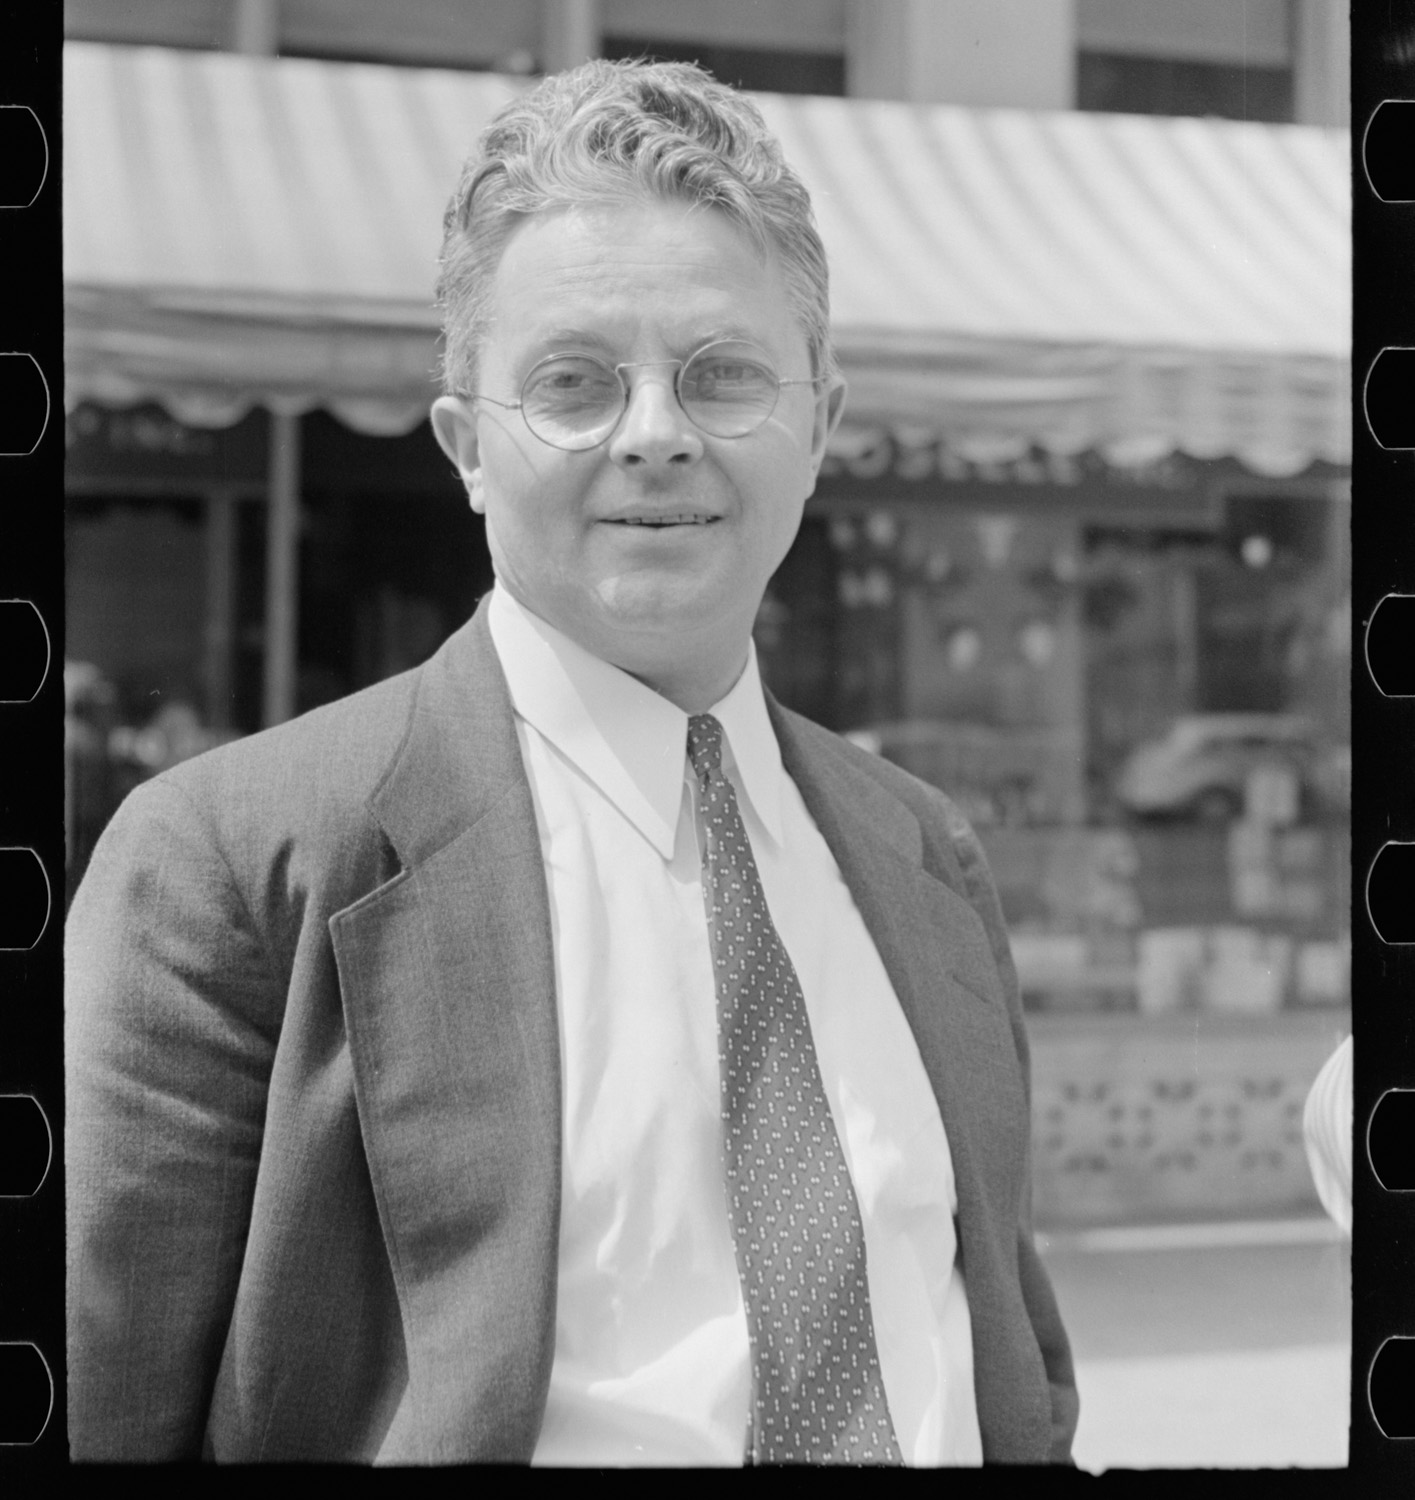 Photograph of Roy E. Stryker